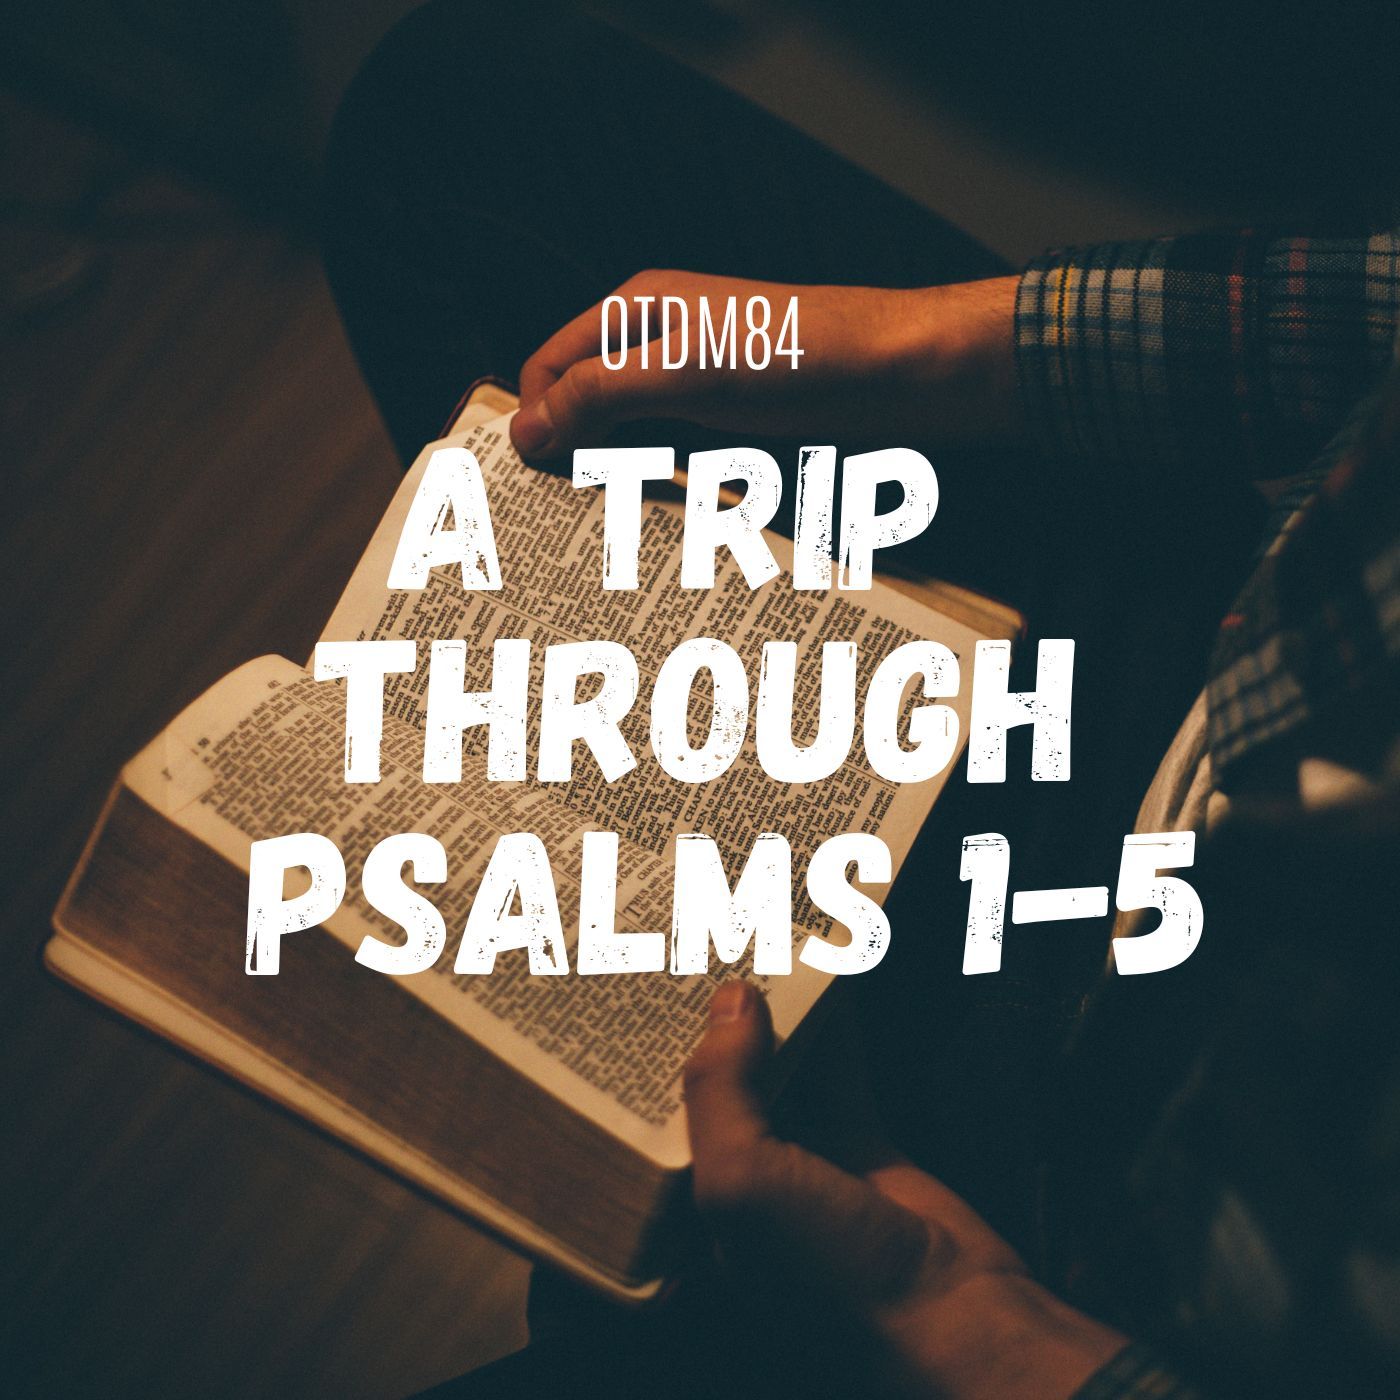 OTDM84 A Trip Through Psalms 1-5